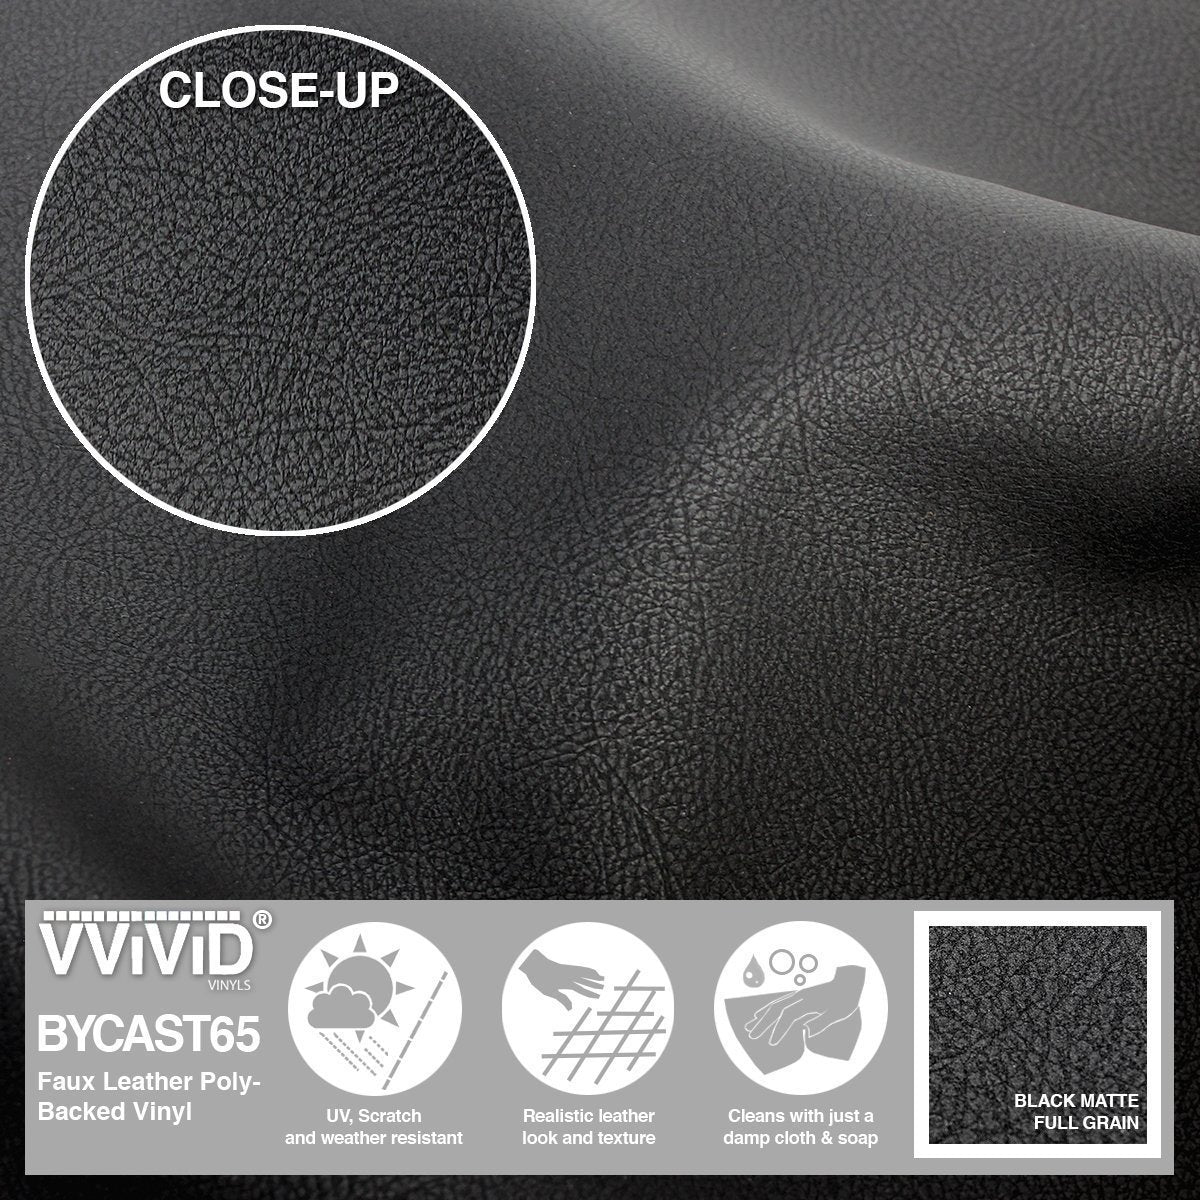 Bycast65 Black Matte Buffed Full-Grain Pattern Faux Leather Marine Vinyl Fabric - The VViViD Vinyl Wrap Shop